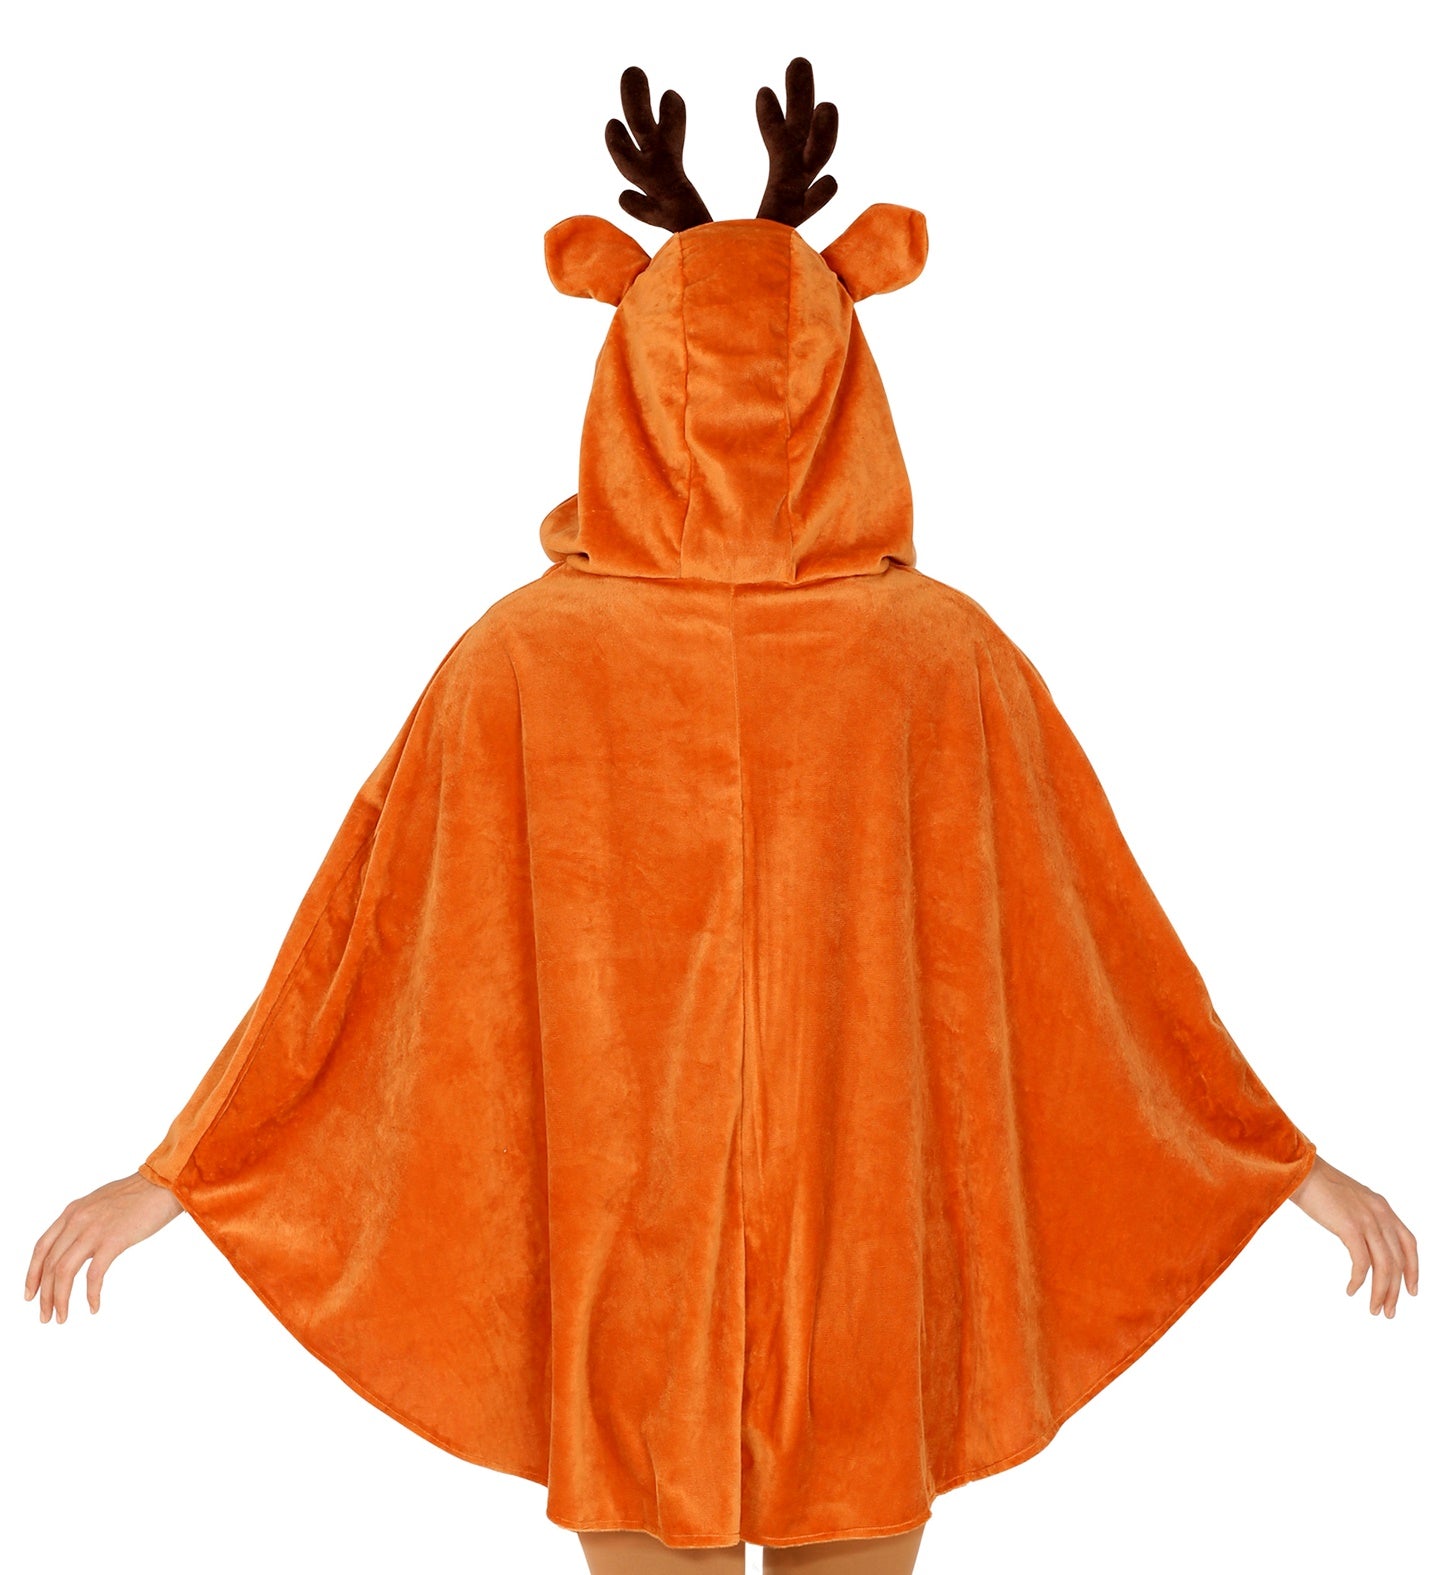 Reindeer Costume Poncho Adult